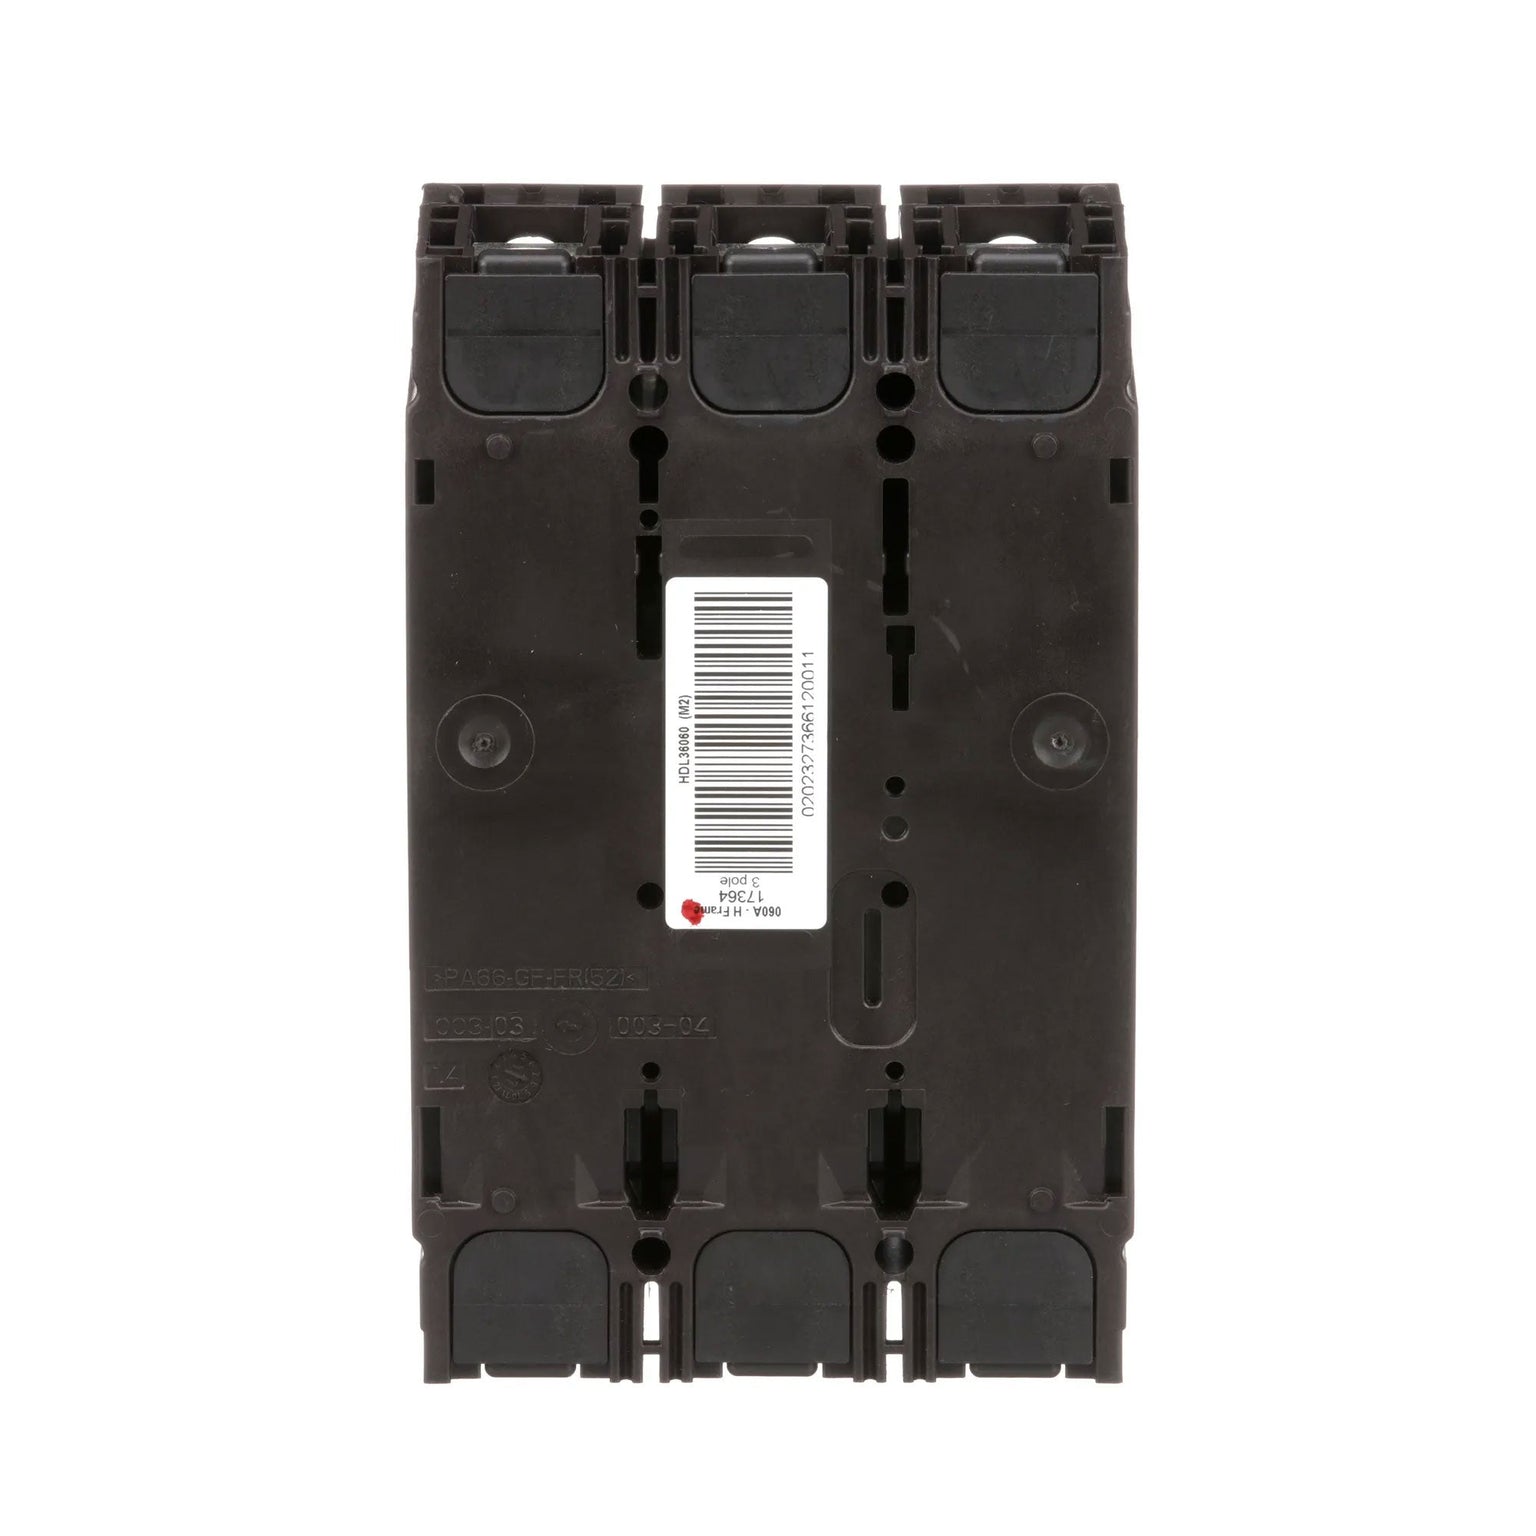 HDL36060 - Square D - Molded Case Circuit Breaker